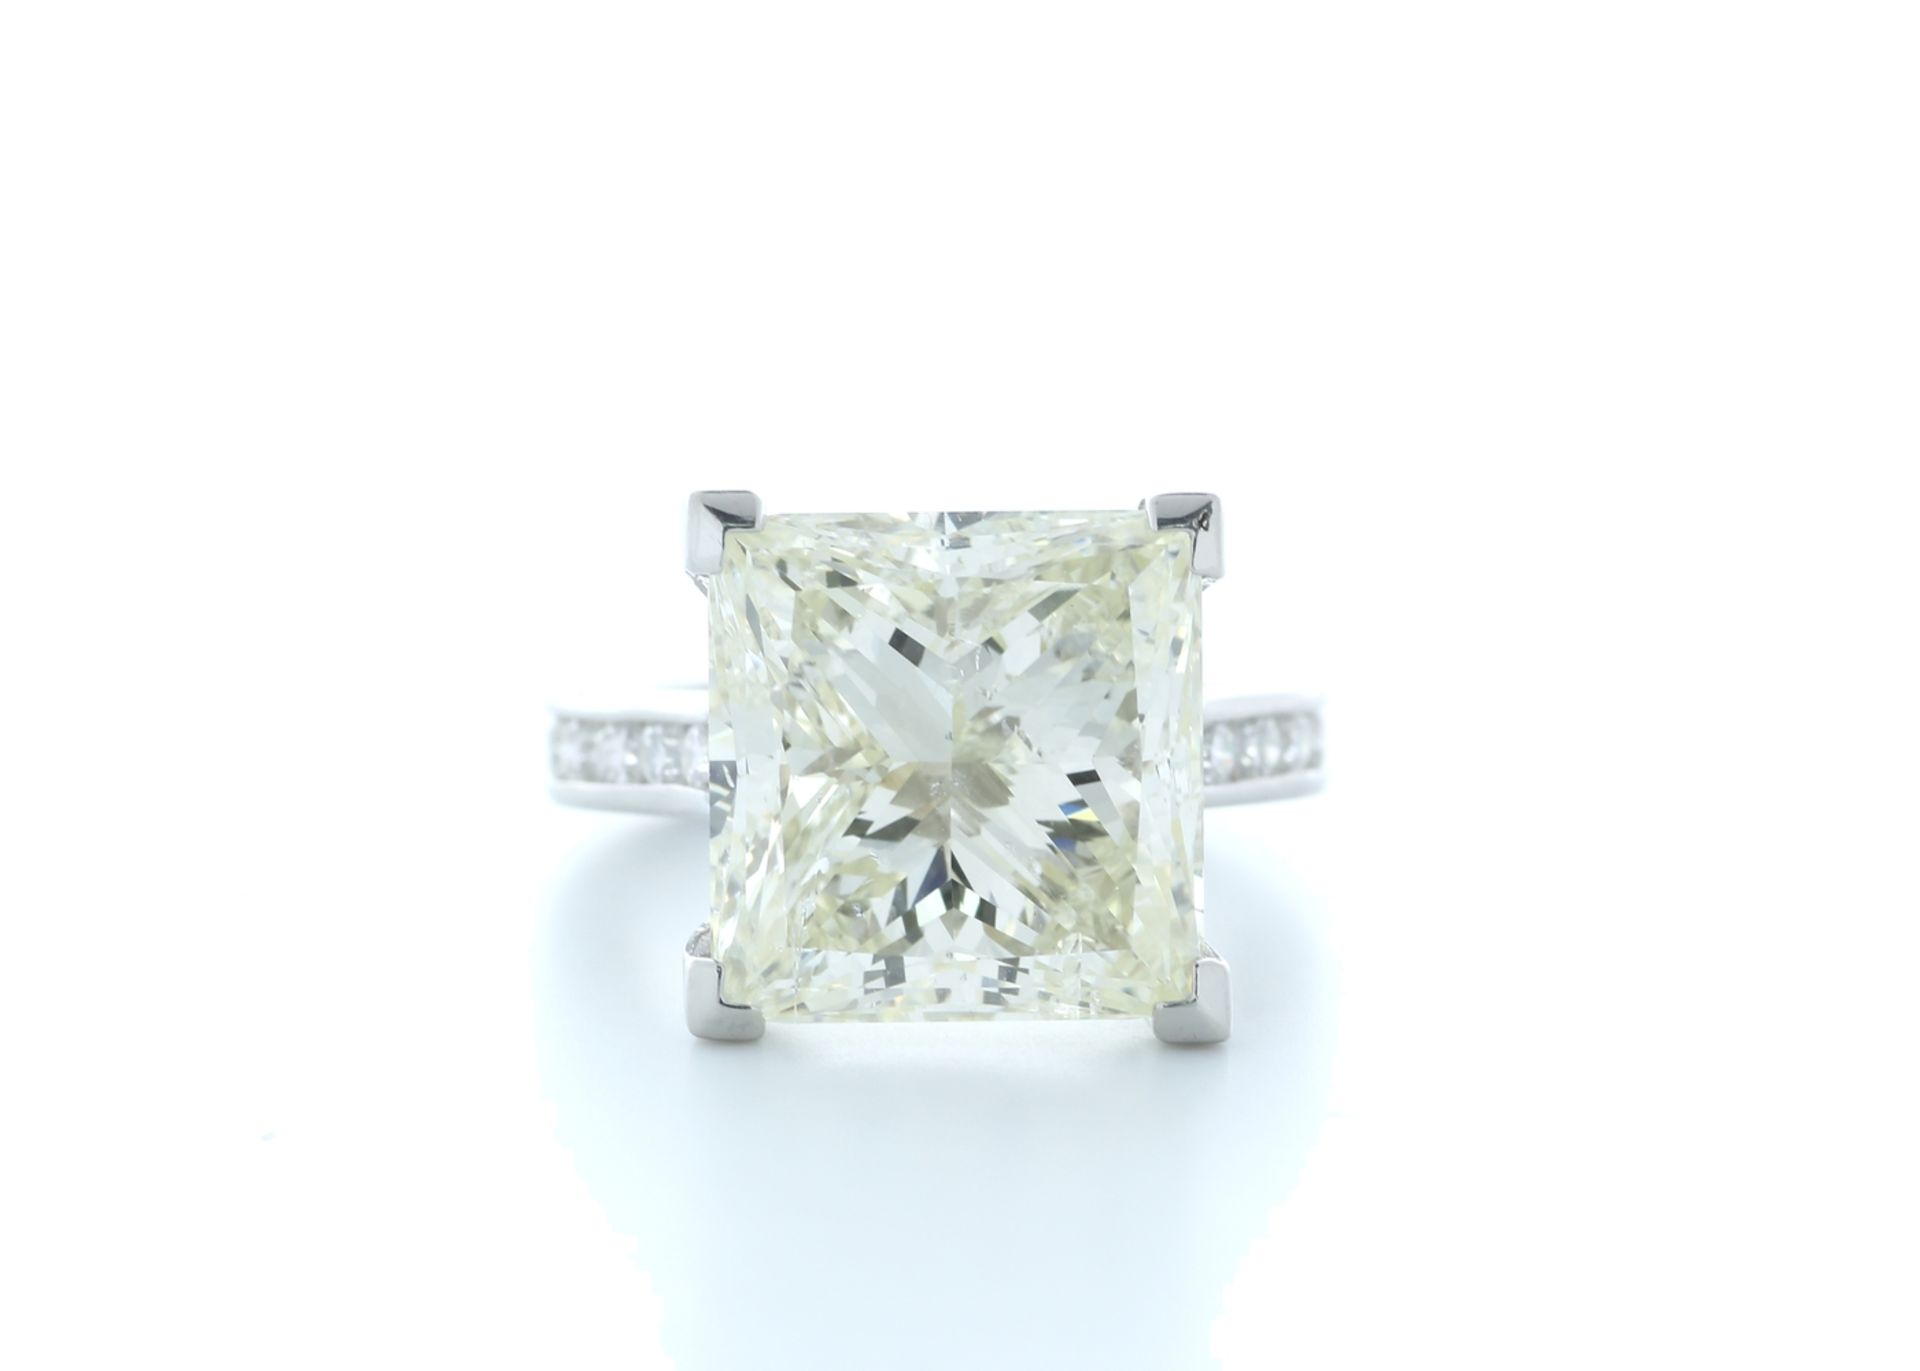 18ct White Gold Princess Cut Diamond Ring 10.00 Carats Carats - Valued by IDI £495,000.00 - 18ct